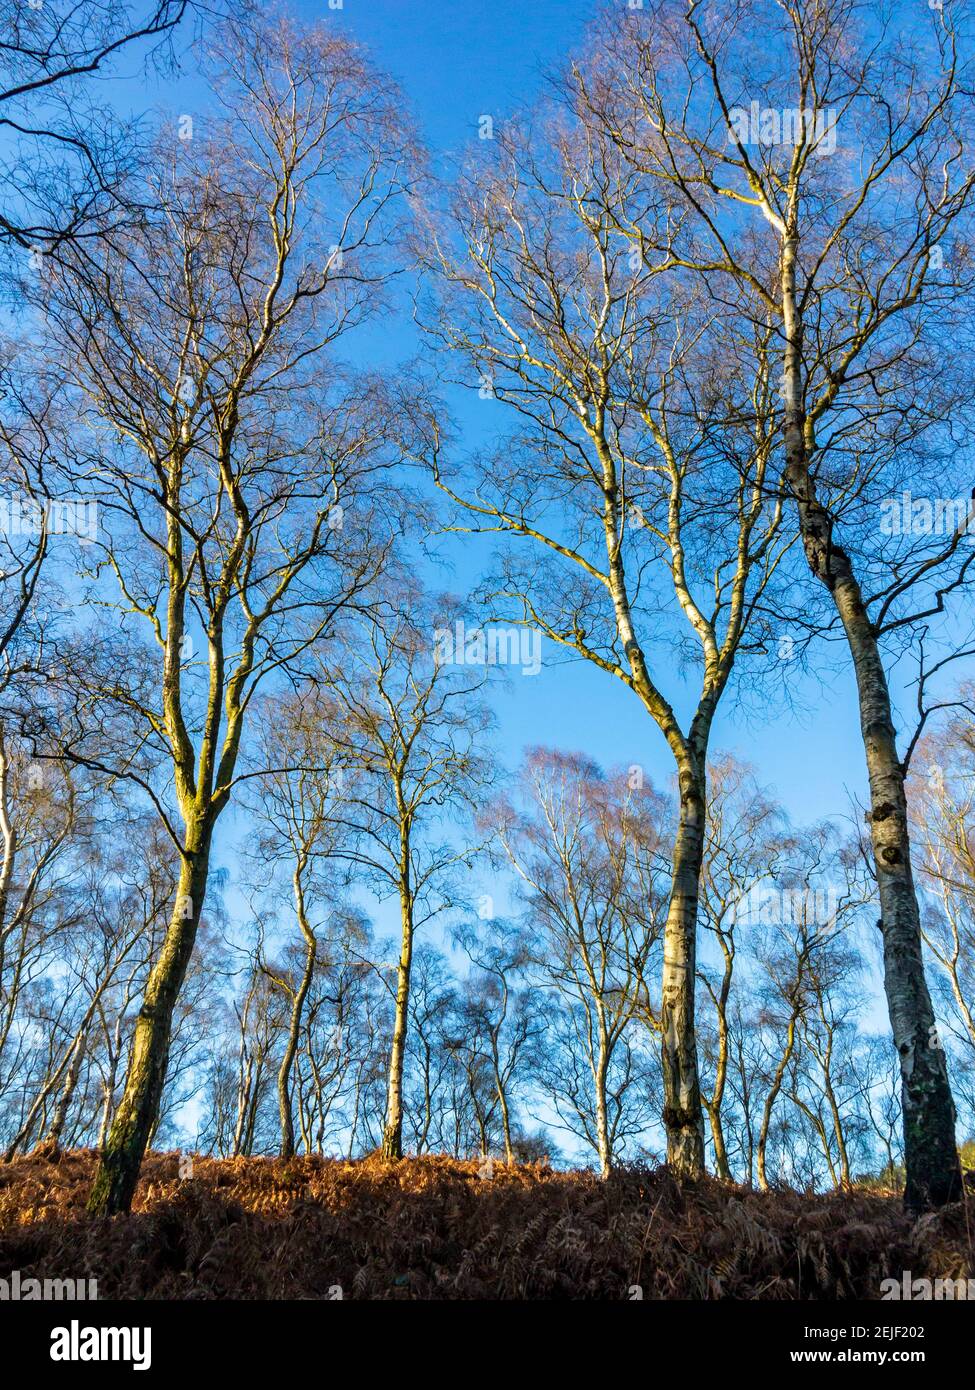 Silver birch betula pendula trees in winter sunshine on Cannock Chase in Staffordshire England UK. Stock Photo